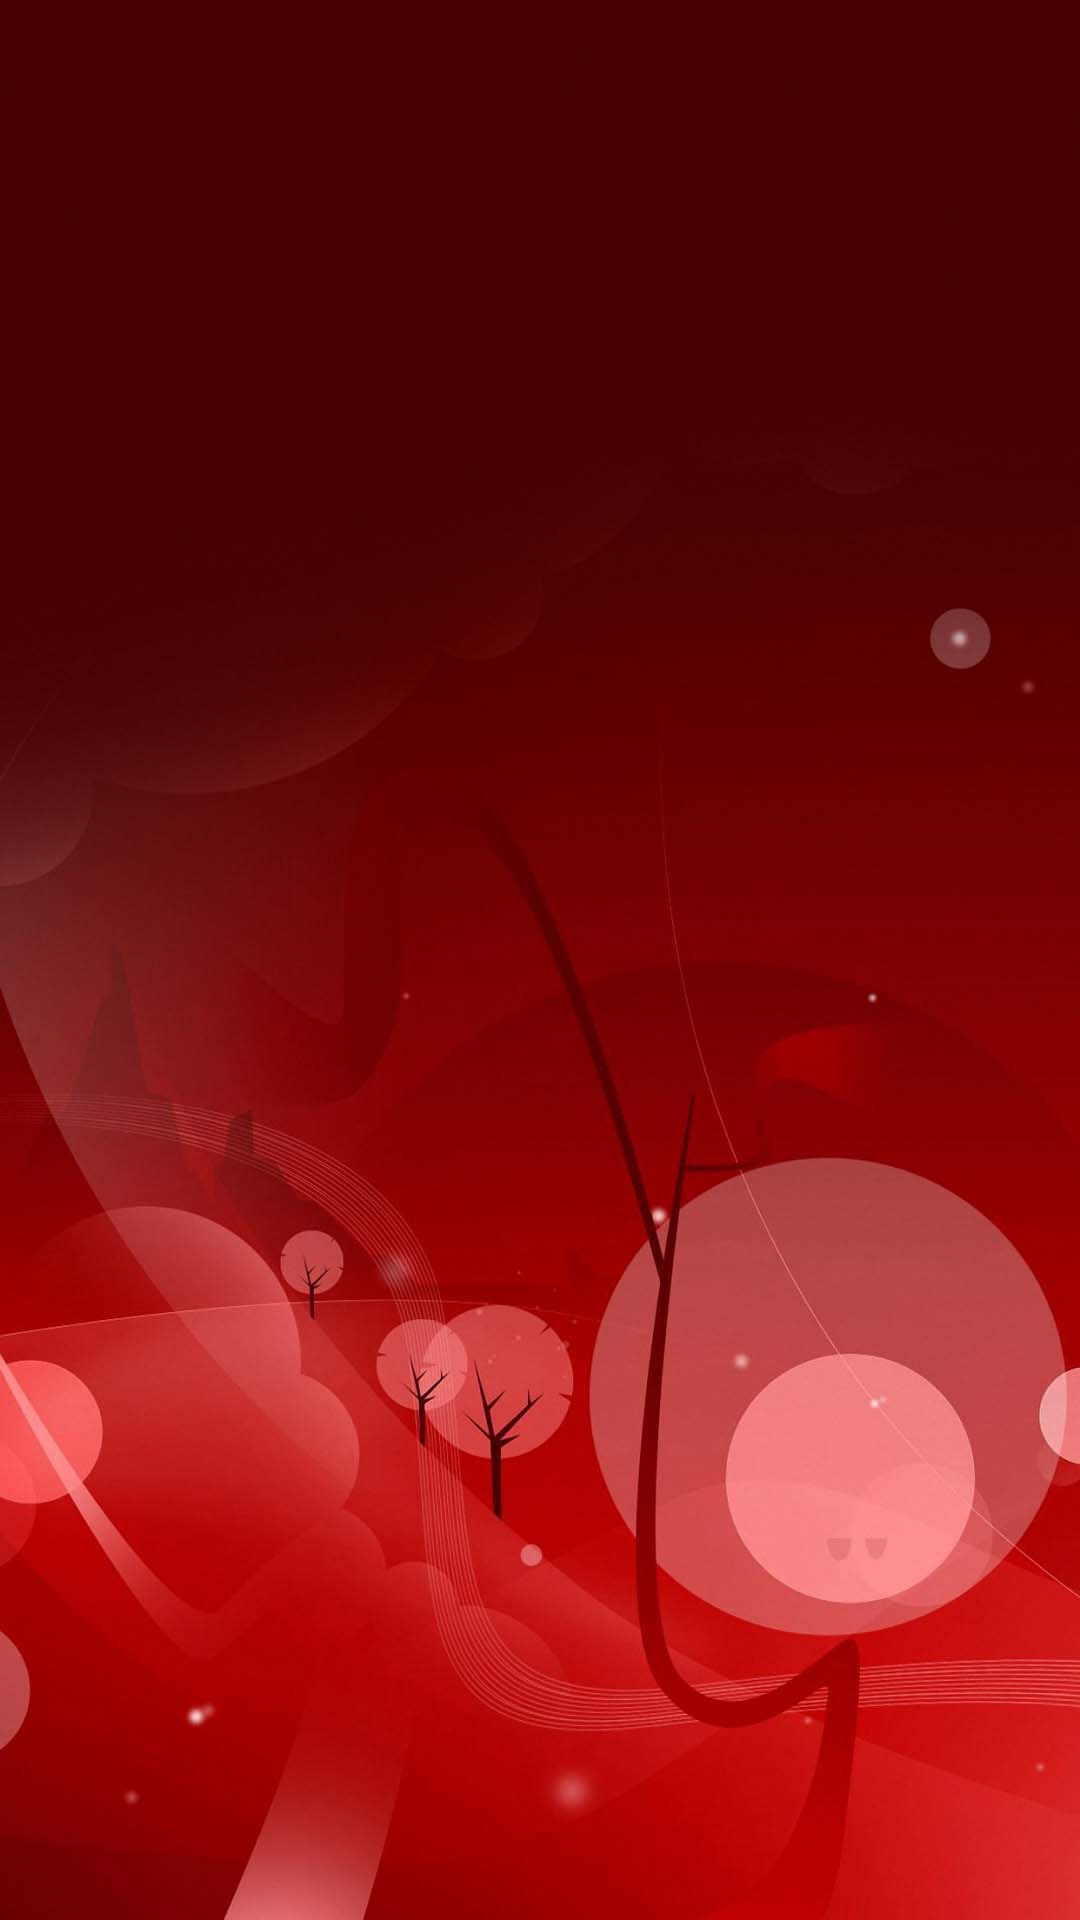 Fundo Vermelho 4k Hd Wallpaper Fond D écran Rouge Iphone 7